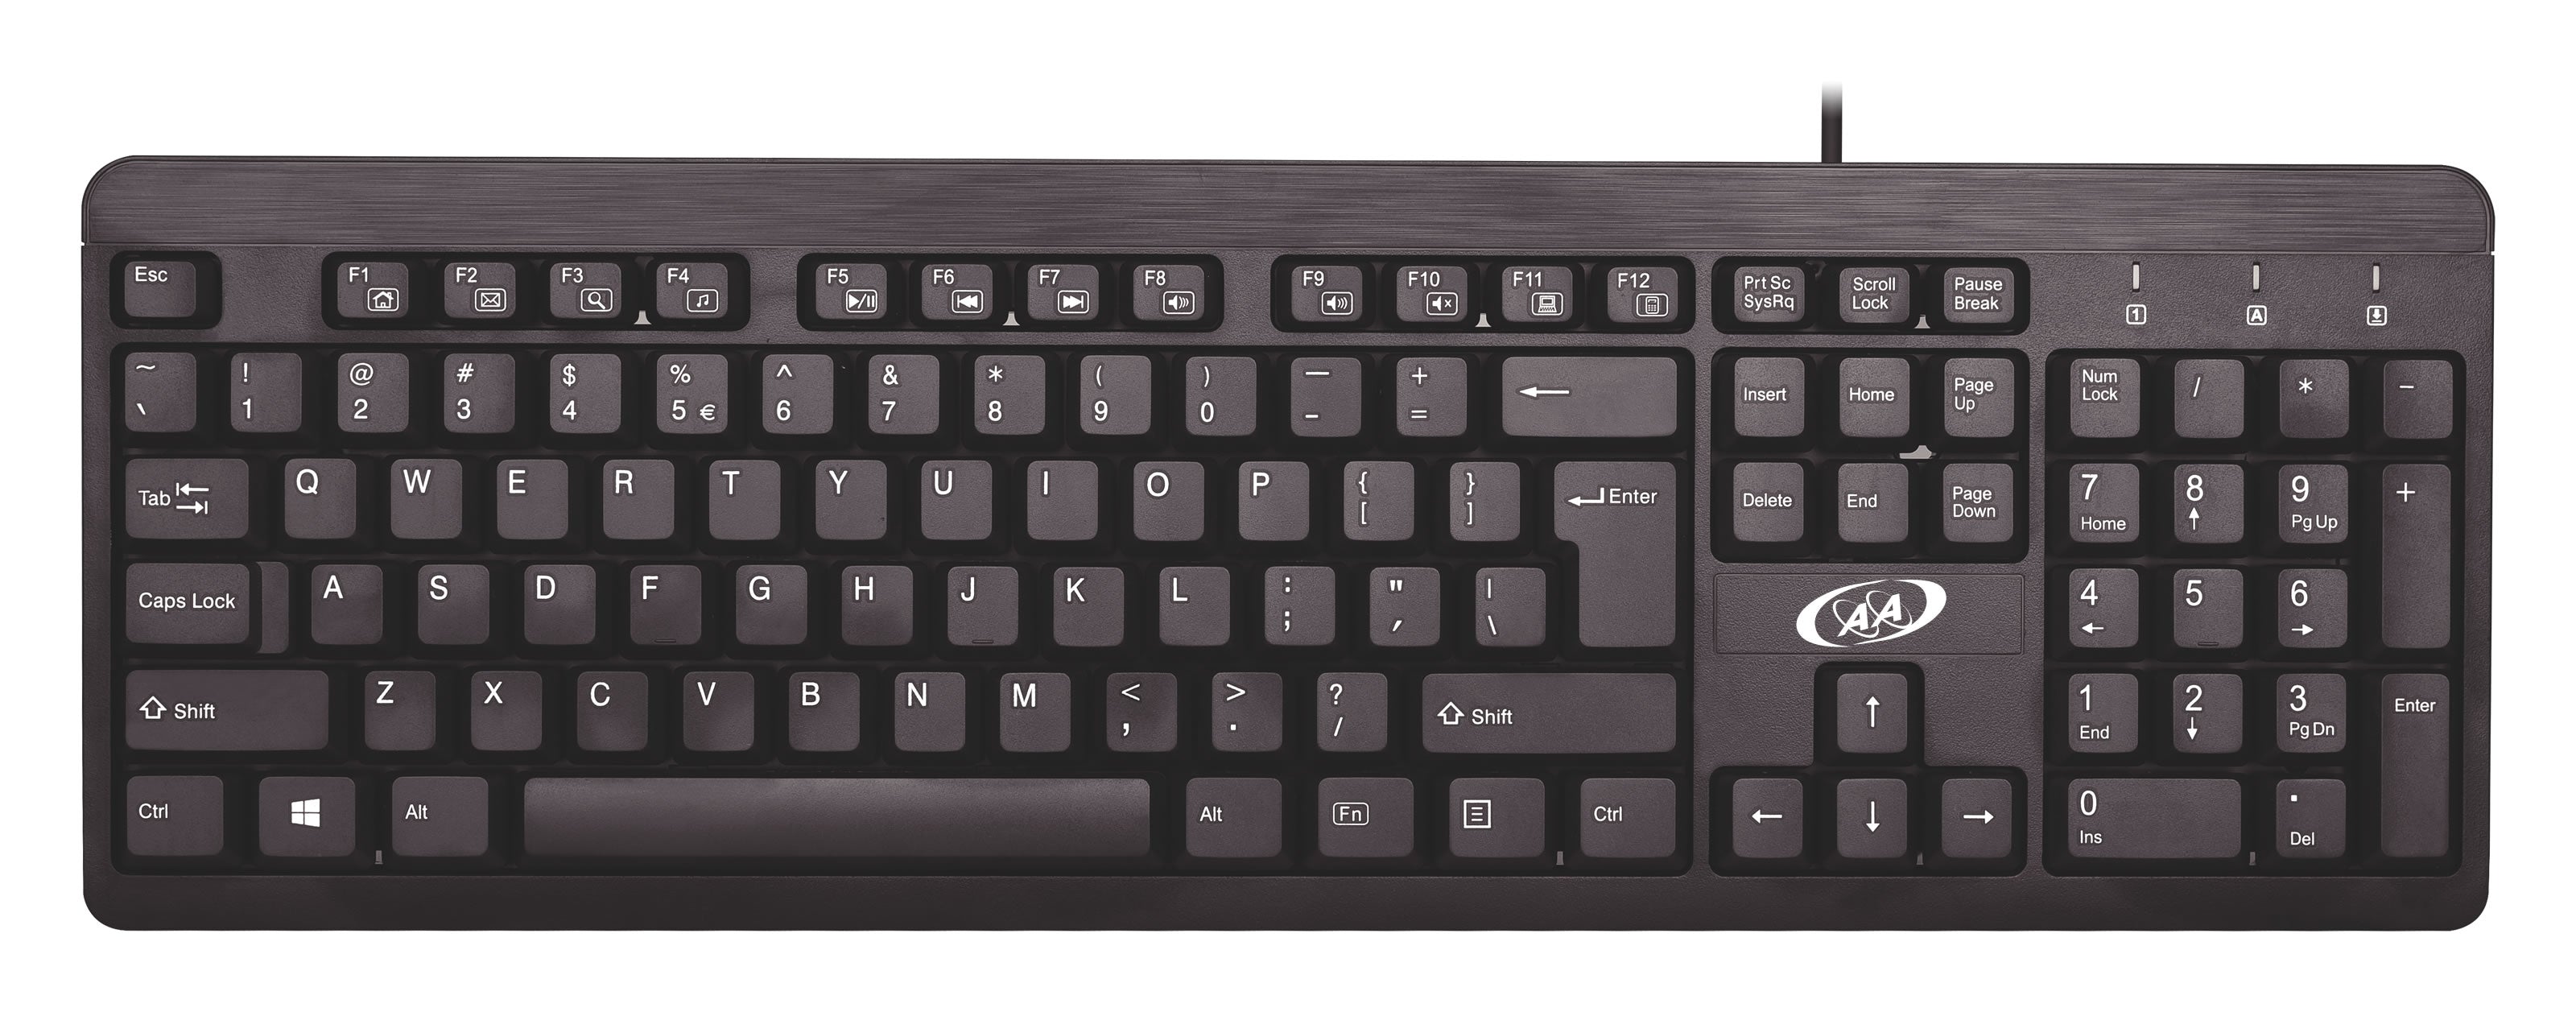 05-0522 USB Wired Keyboard